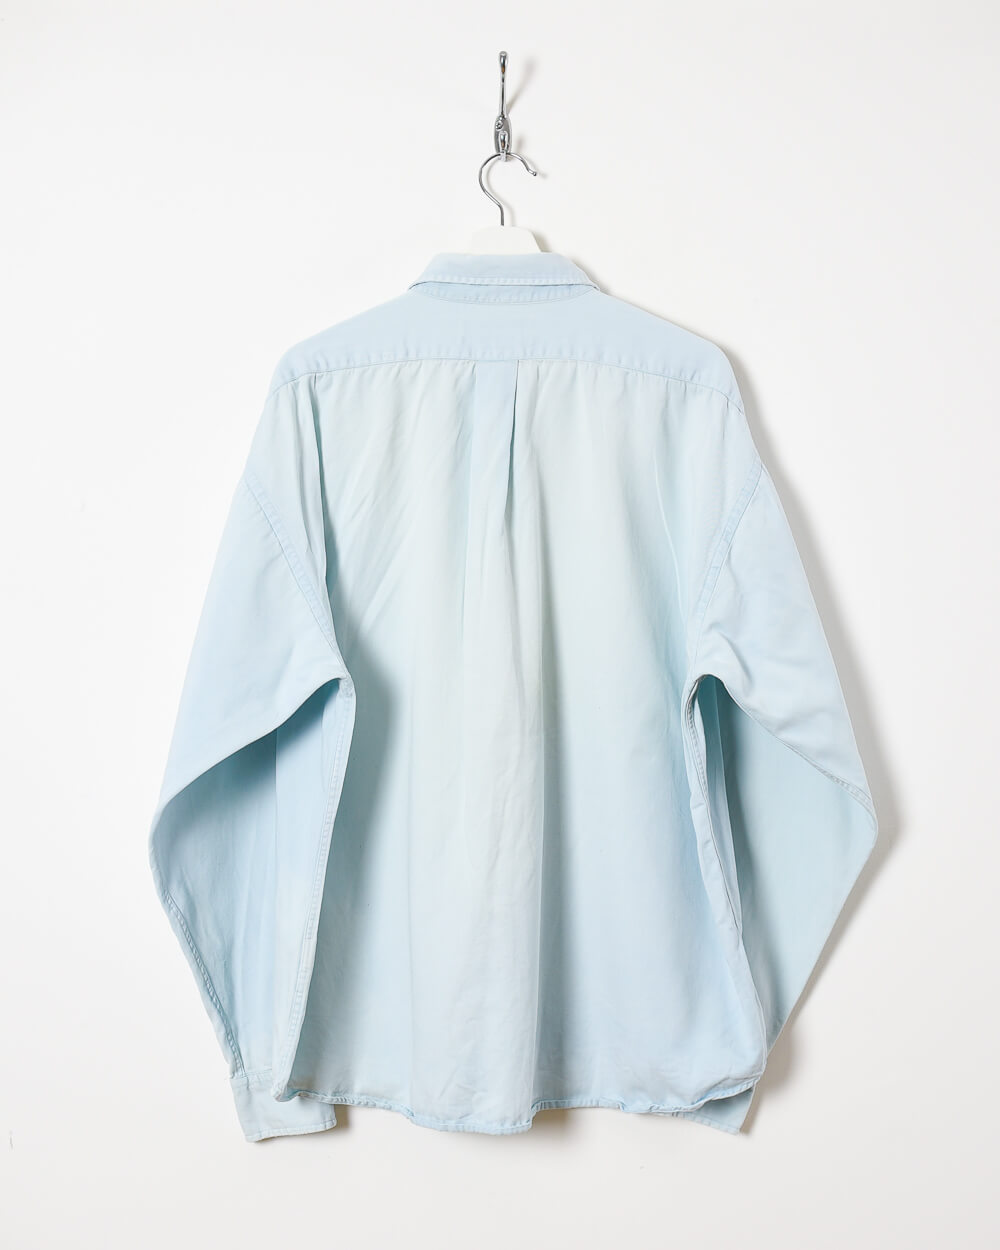 Yves Saint Laurent Shirt - XX-Large - Domno Vintage 90s, 80s, 00s Retro and Vintage Clothing 